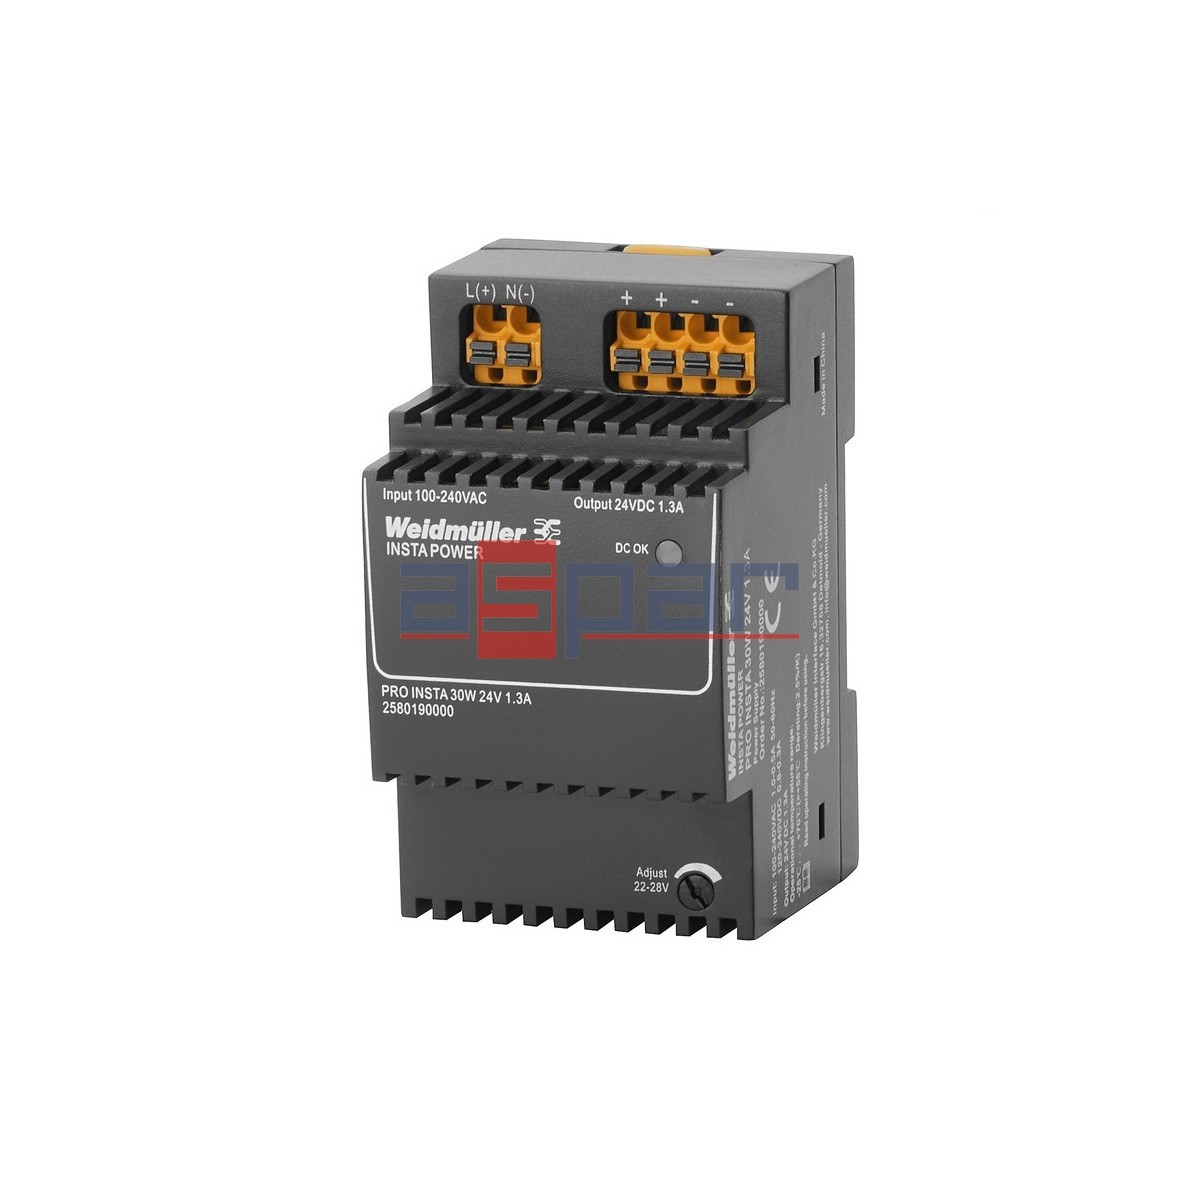 switch-mode power supply unit, 24 V, PRO INSTA 30W 24V 1.3A